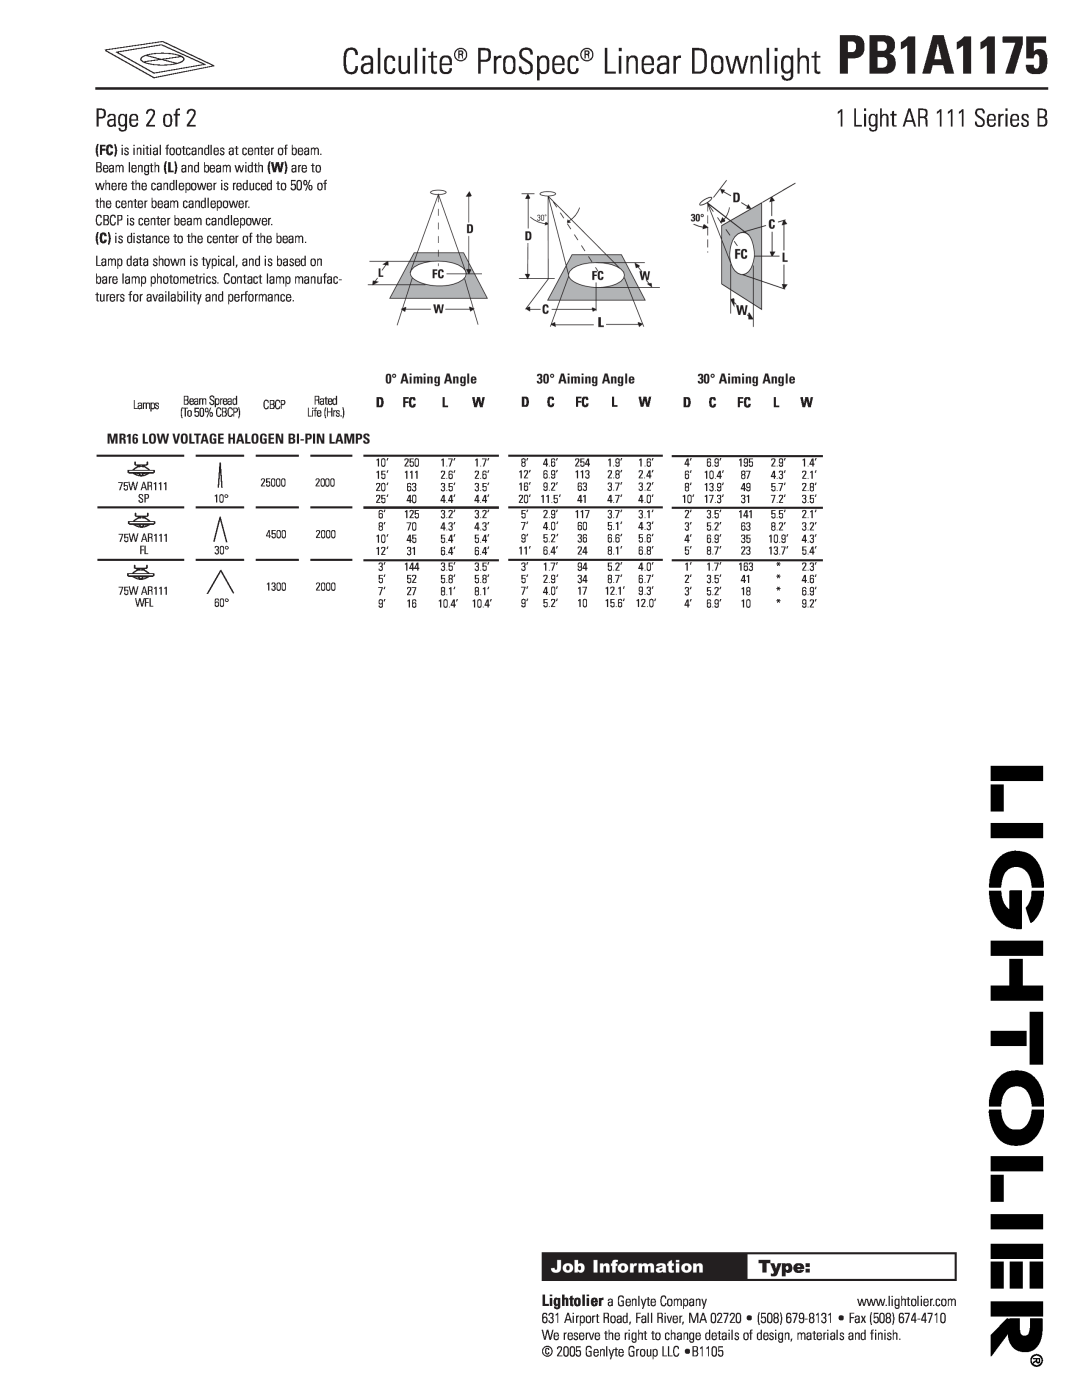 Lightolier manual Page 2 of, Calculite ProSpec Linear Downlight PB1A1175, Light AR 111 Series B, Job Information, Type 